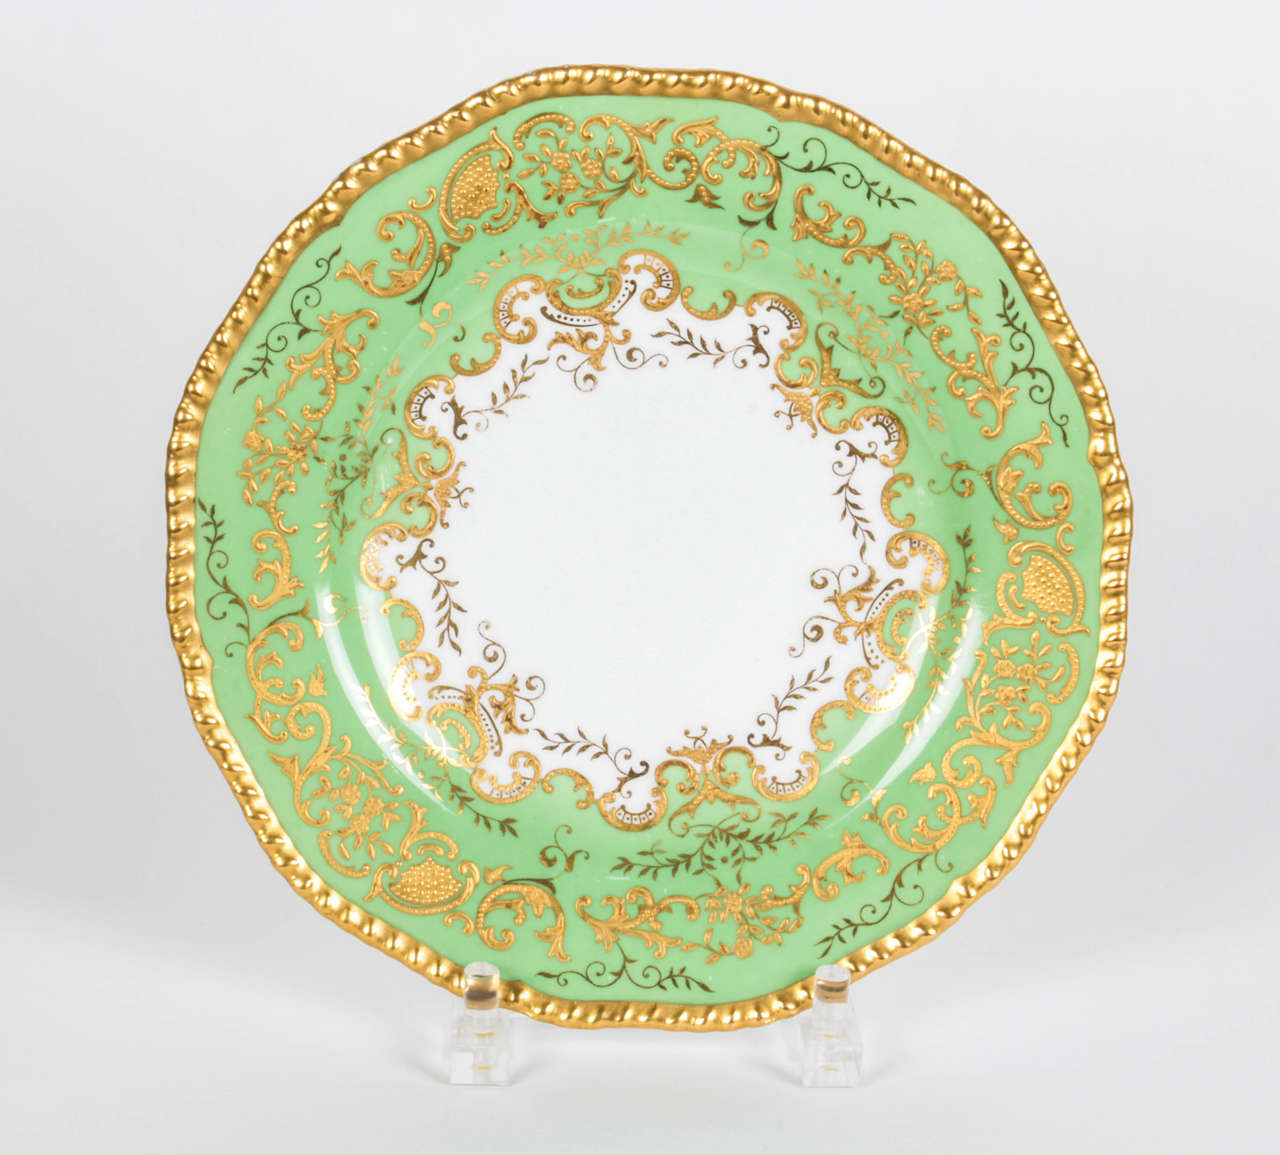 Tiffany & Co. green dinner plates with raised gold gilt detail. Classic Coalport England gadroon shape custom ordered. Additional gilt foliage design on inner collar. Circa 1905